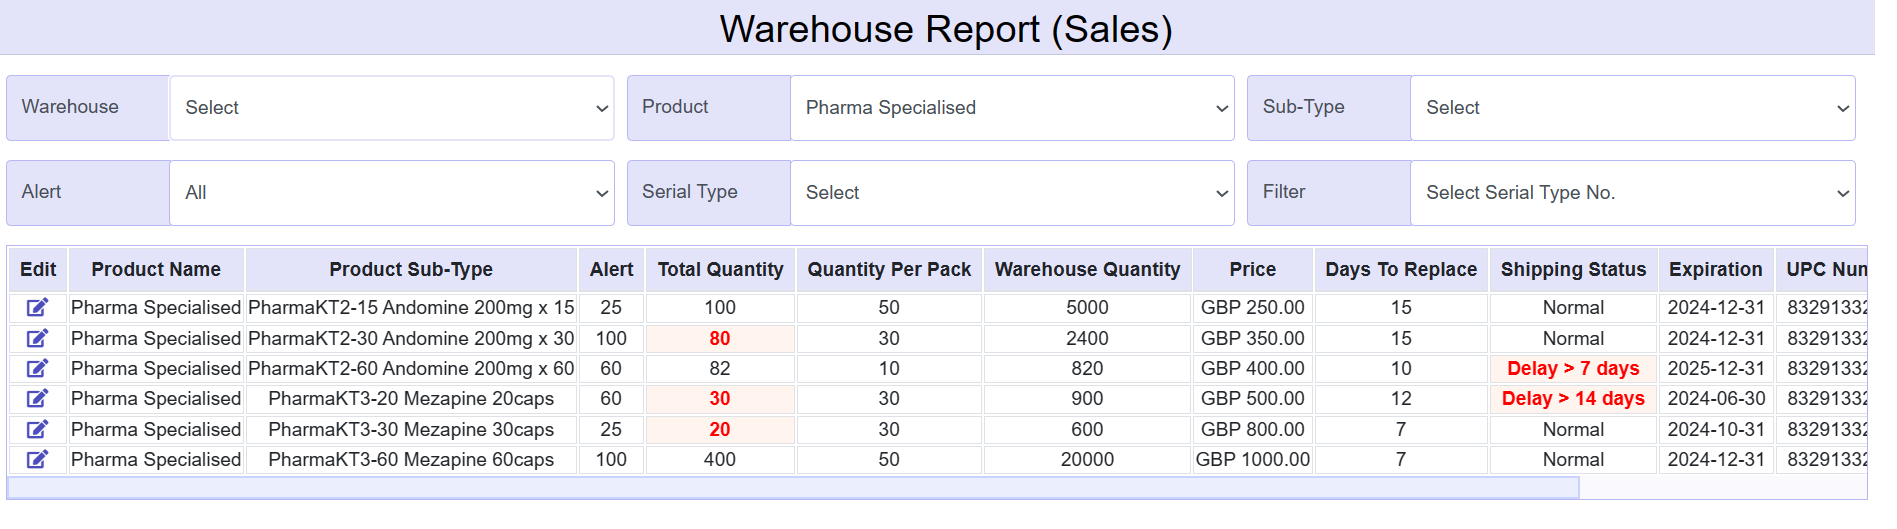 ecommerce-warehouse-report-sales